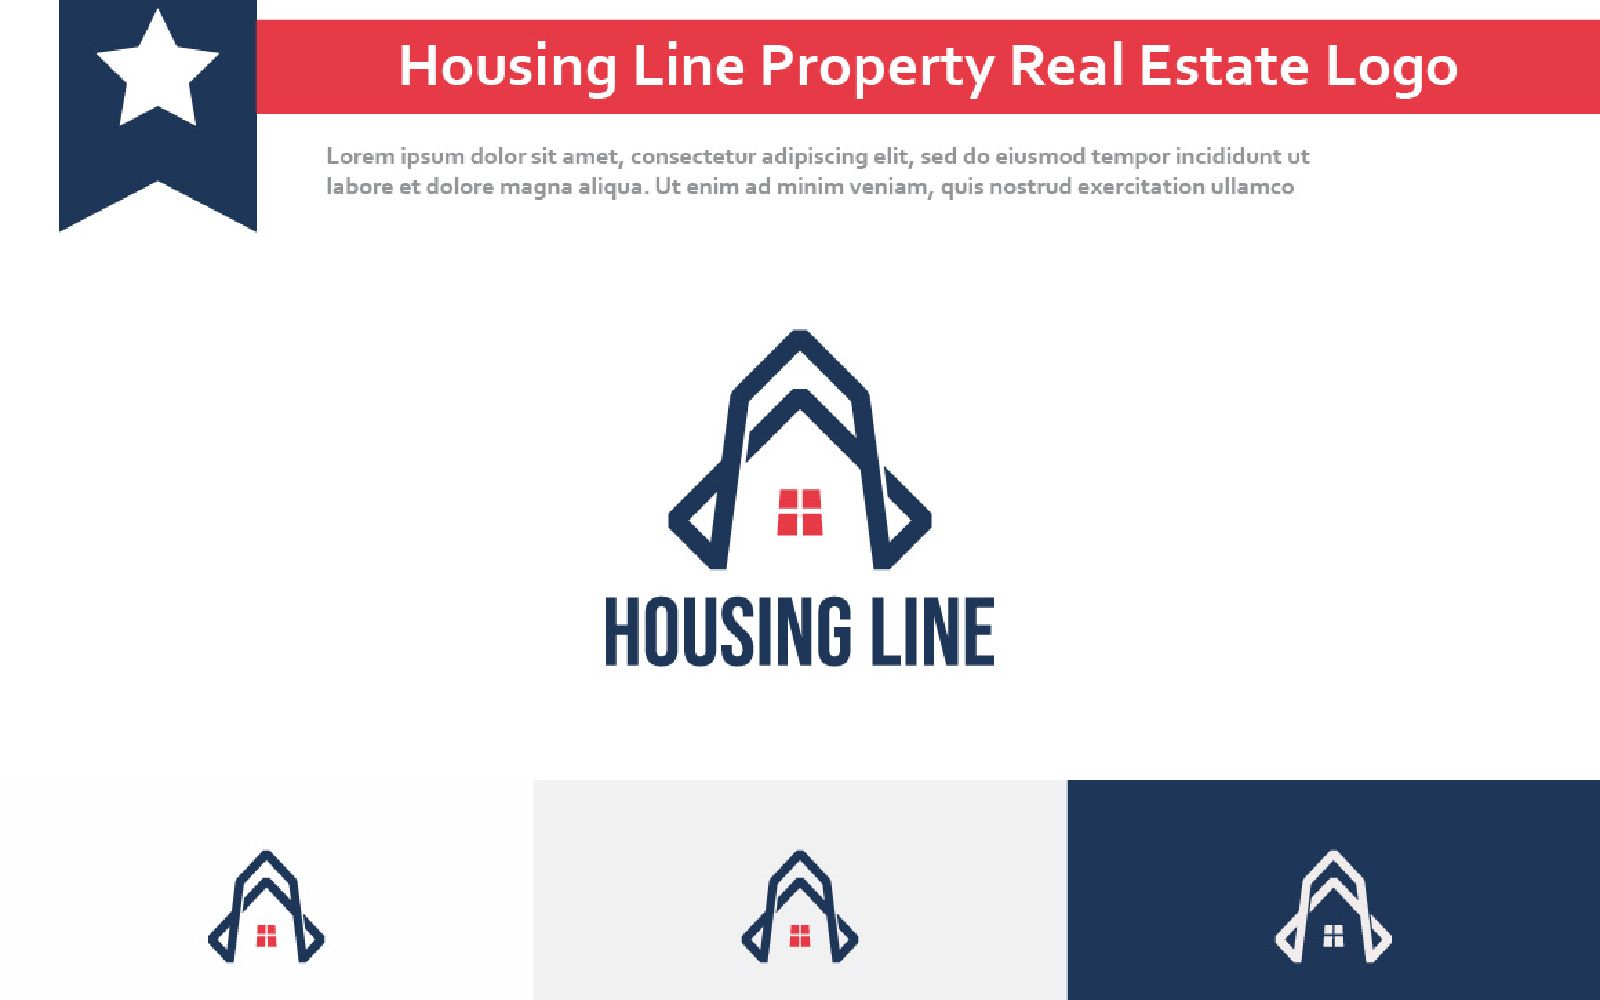 Housing Line Property Real Estate Monoline Style Logo